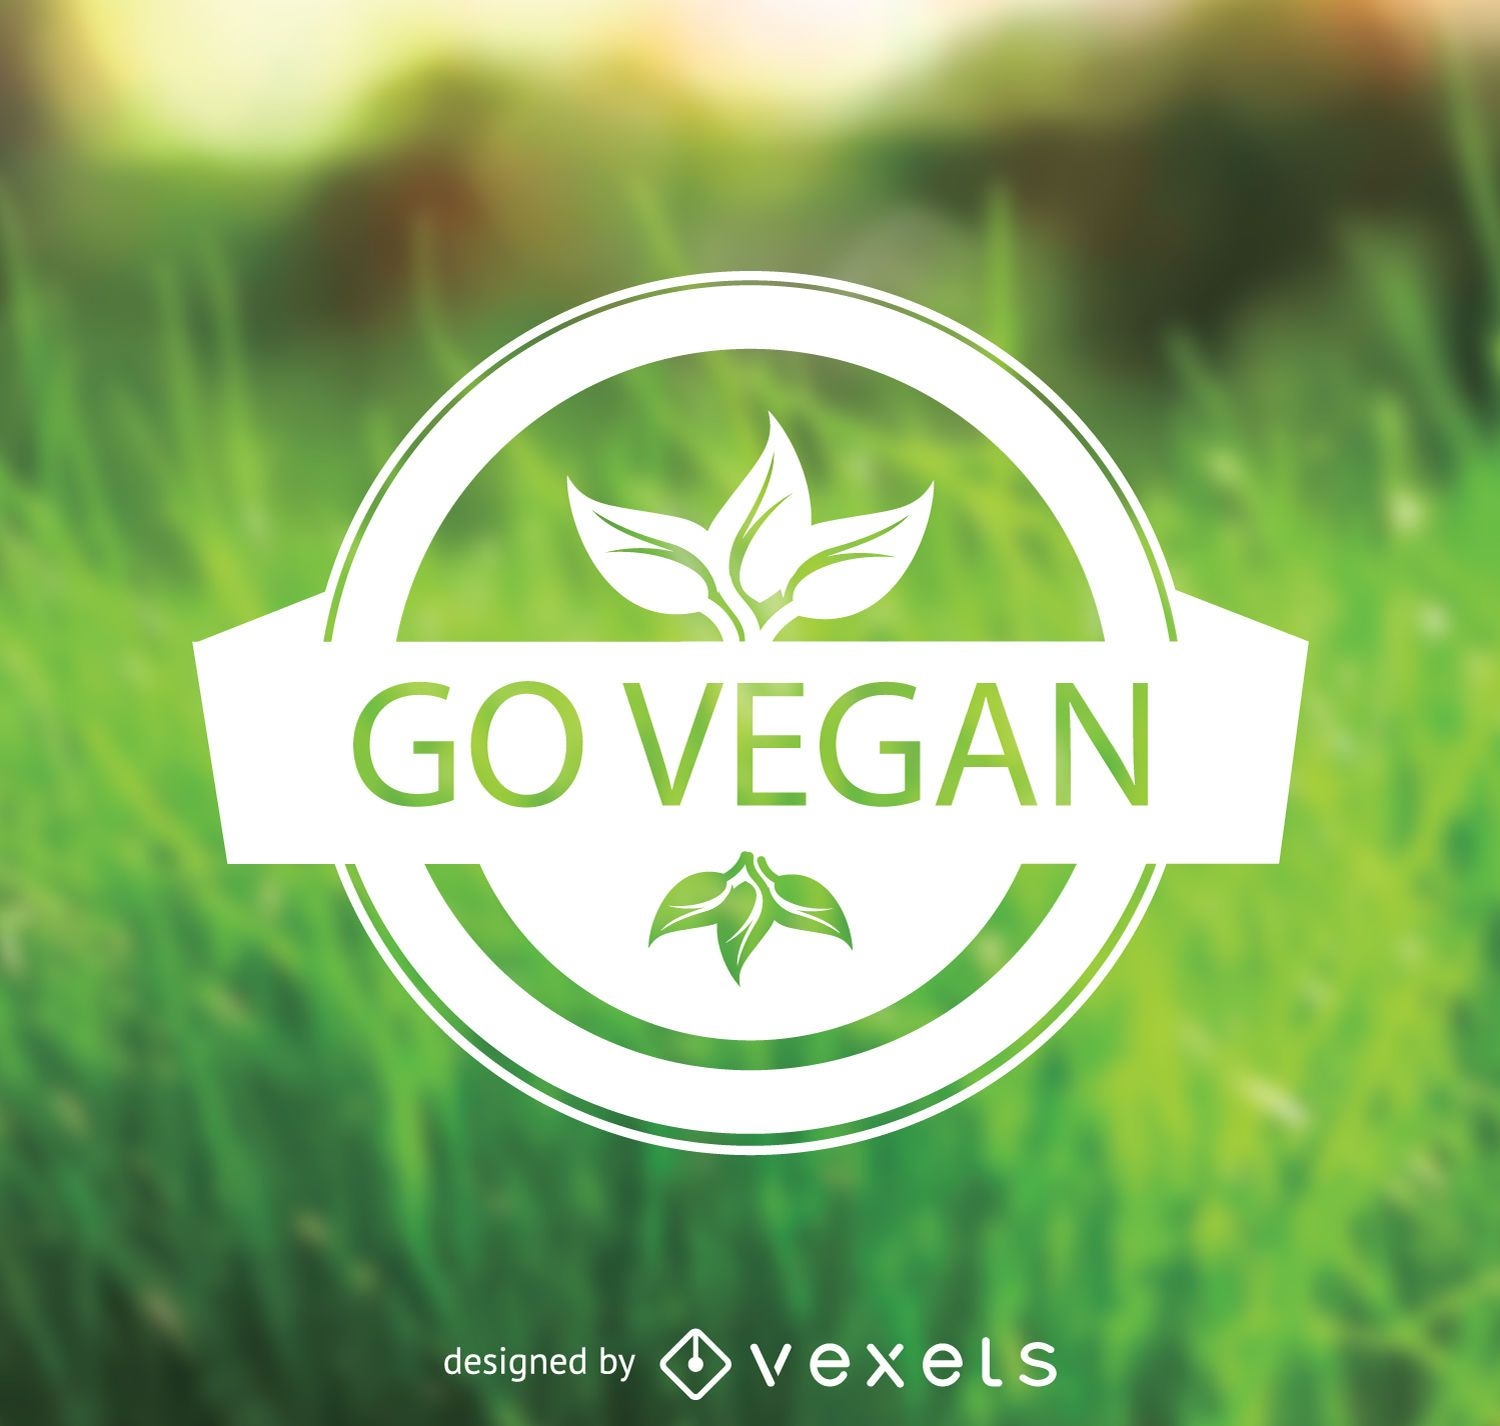 Go vegan emblem